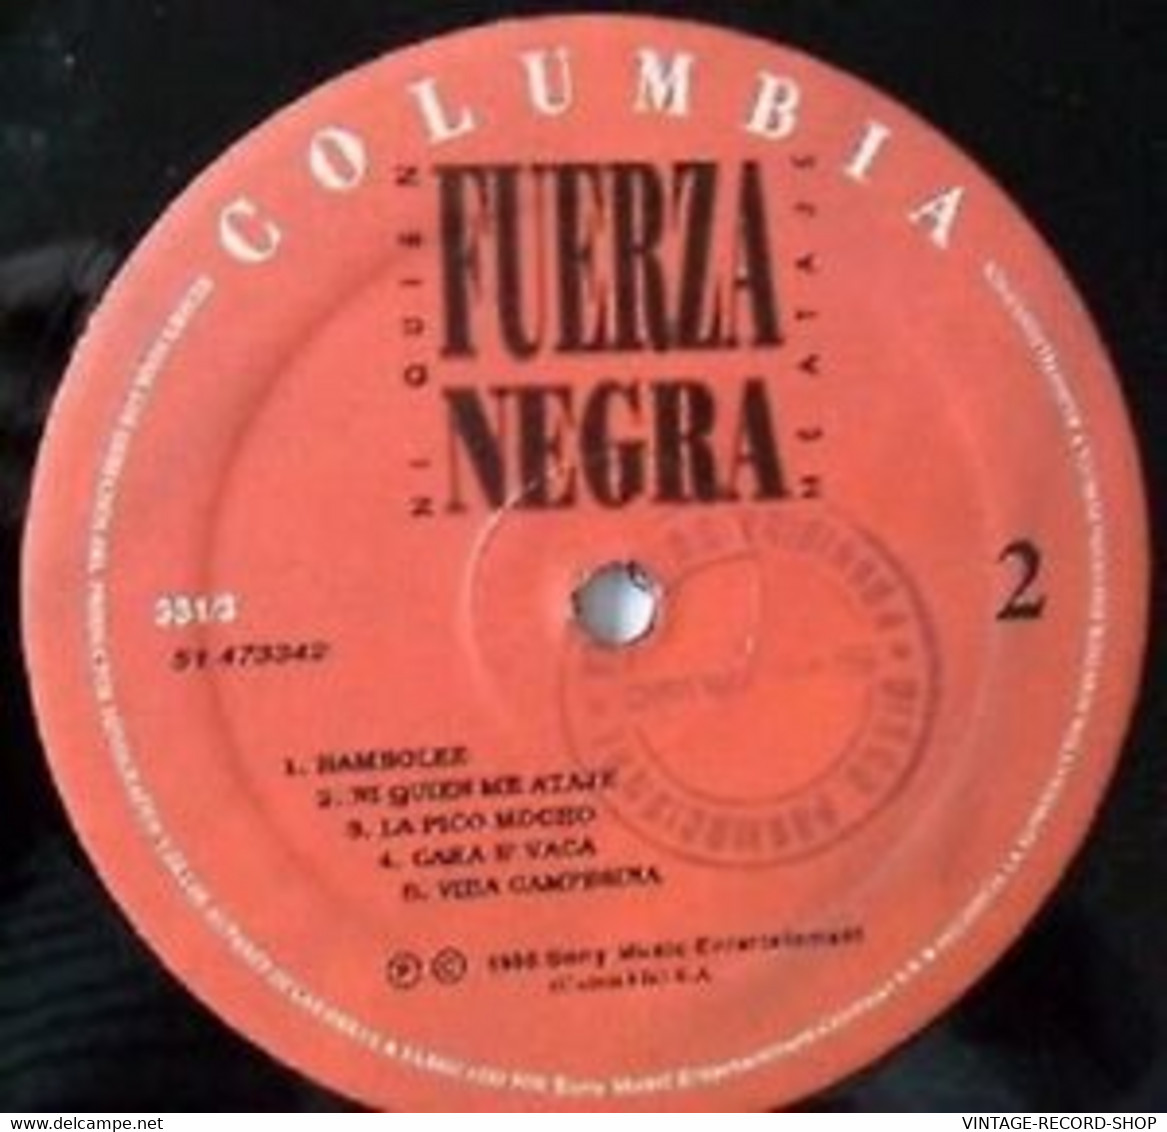 FUERZA NEGRA-NI QUIEN ME ATAJE-MATICA DE MAFAFA-VARIOS /PROMO-COLUMBIA 1995 - World Music